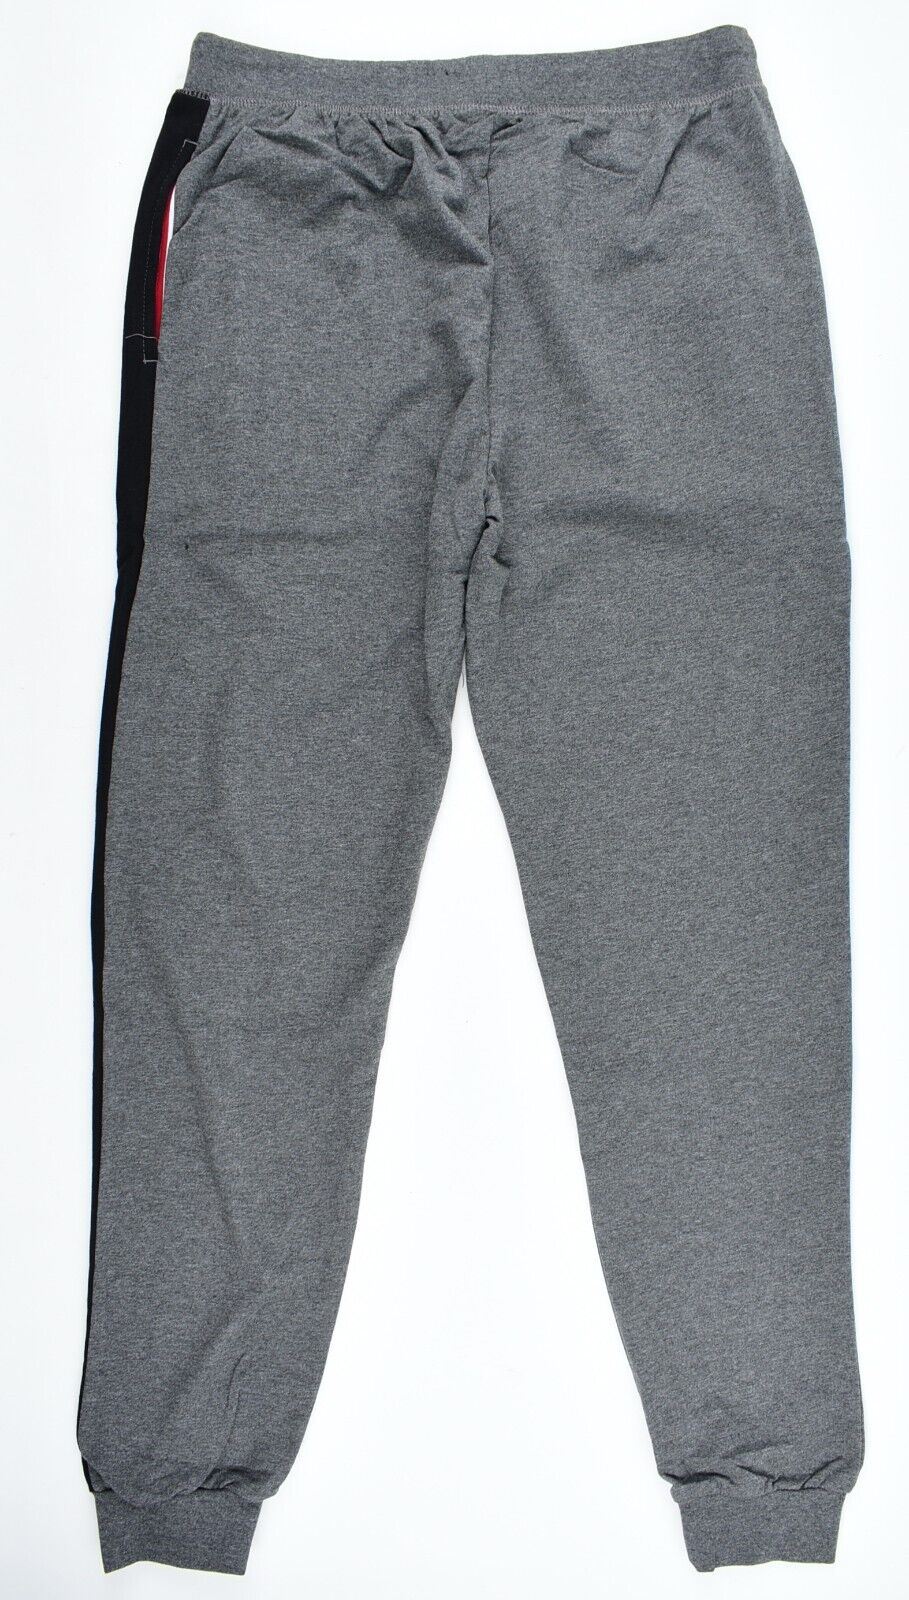 DKNY Mens Lounge Pants /Sweatpants, Grey-Black, size LARGE